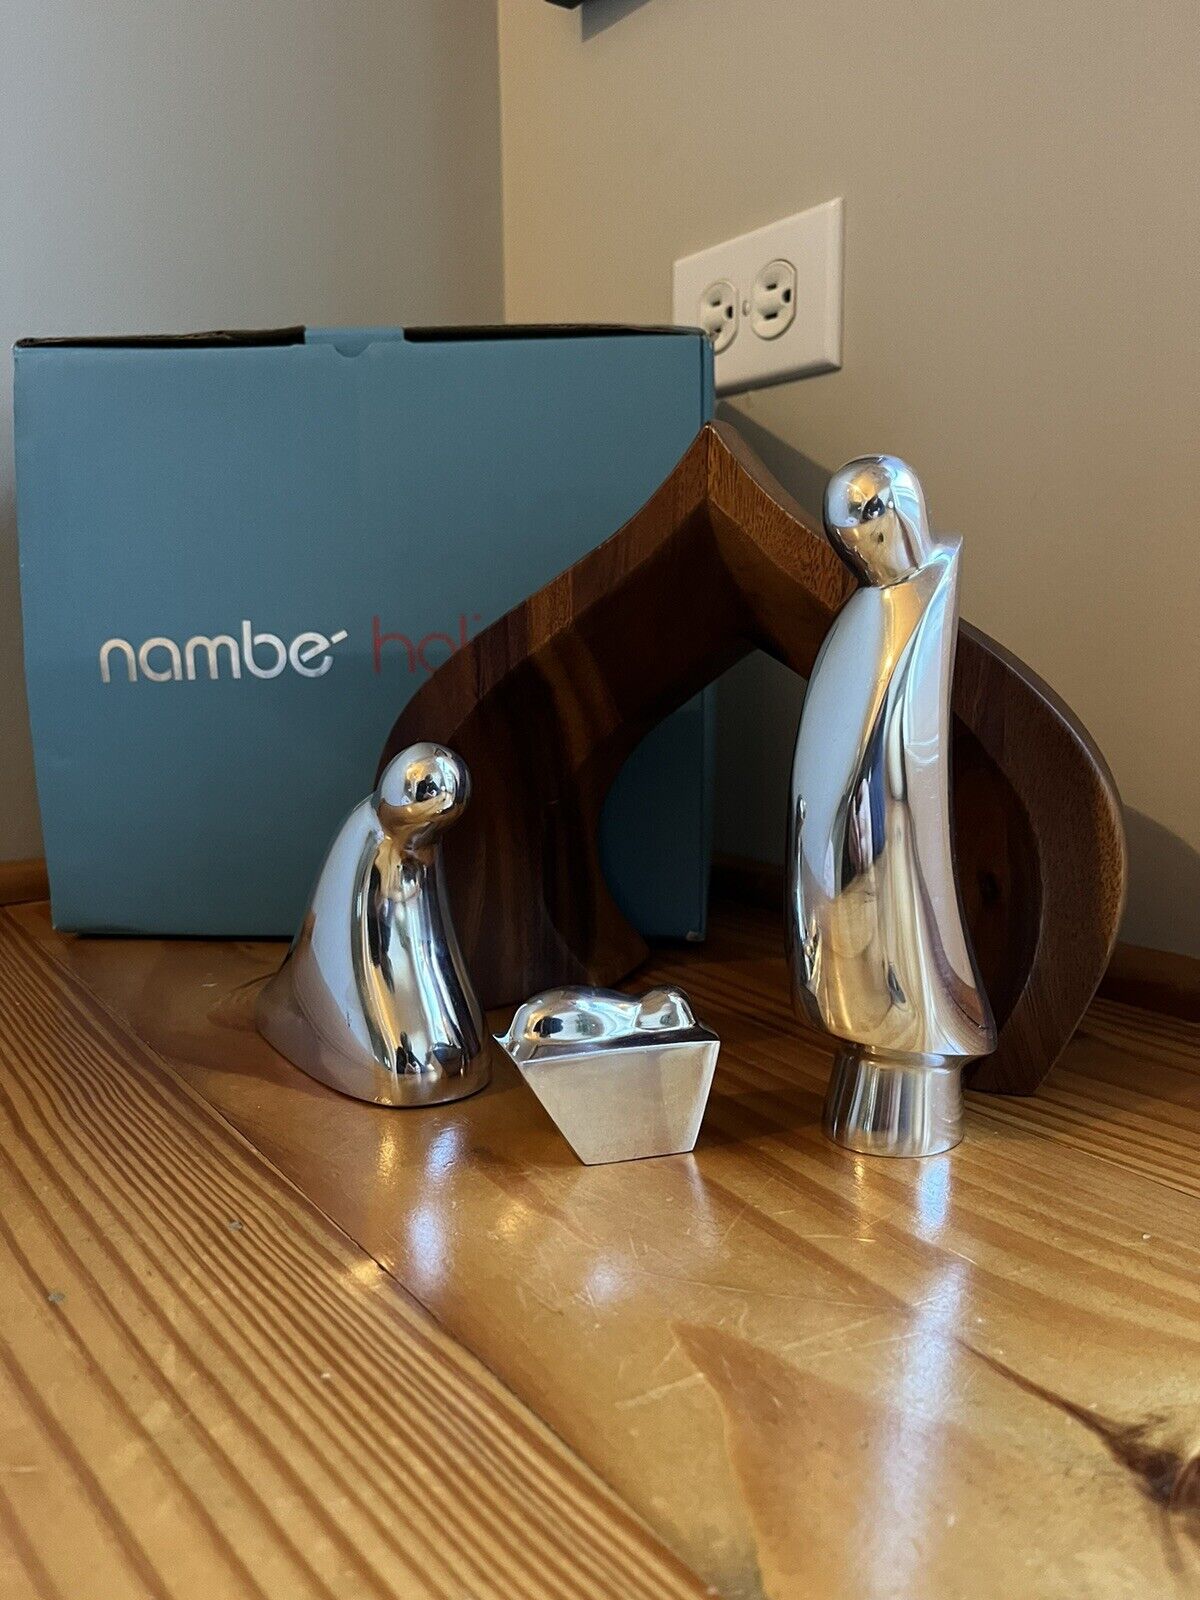 Large Nambe Nativity Set Holiday Christmas $200 MSRP New Open Box